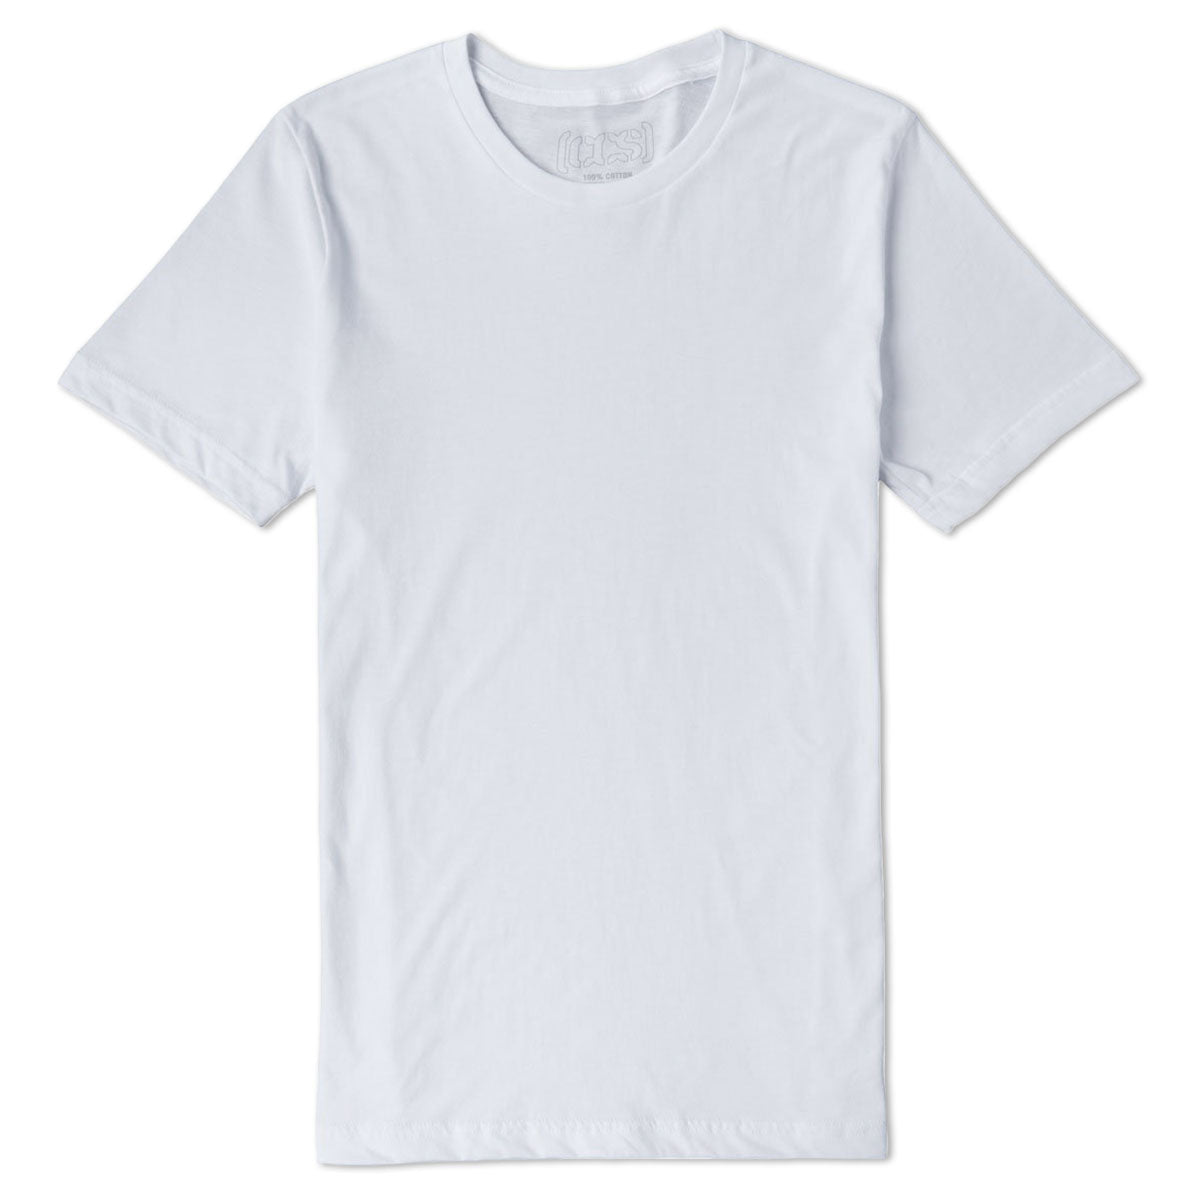 CCS Basis T-Shirt - White image 1